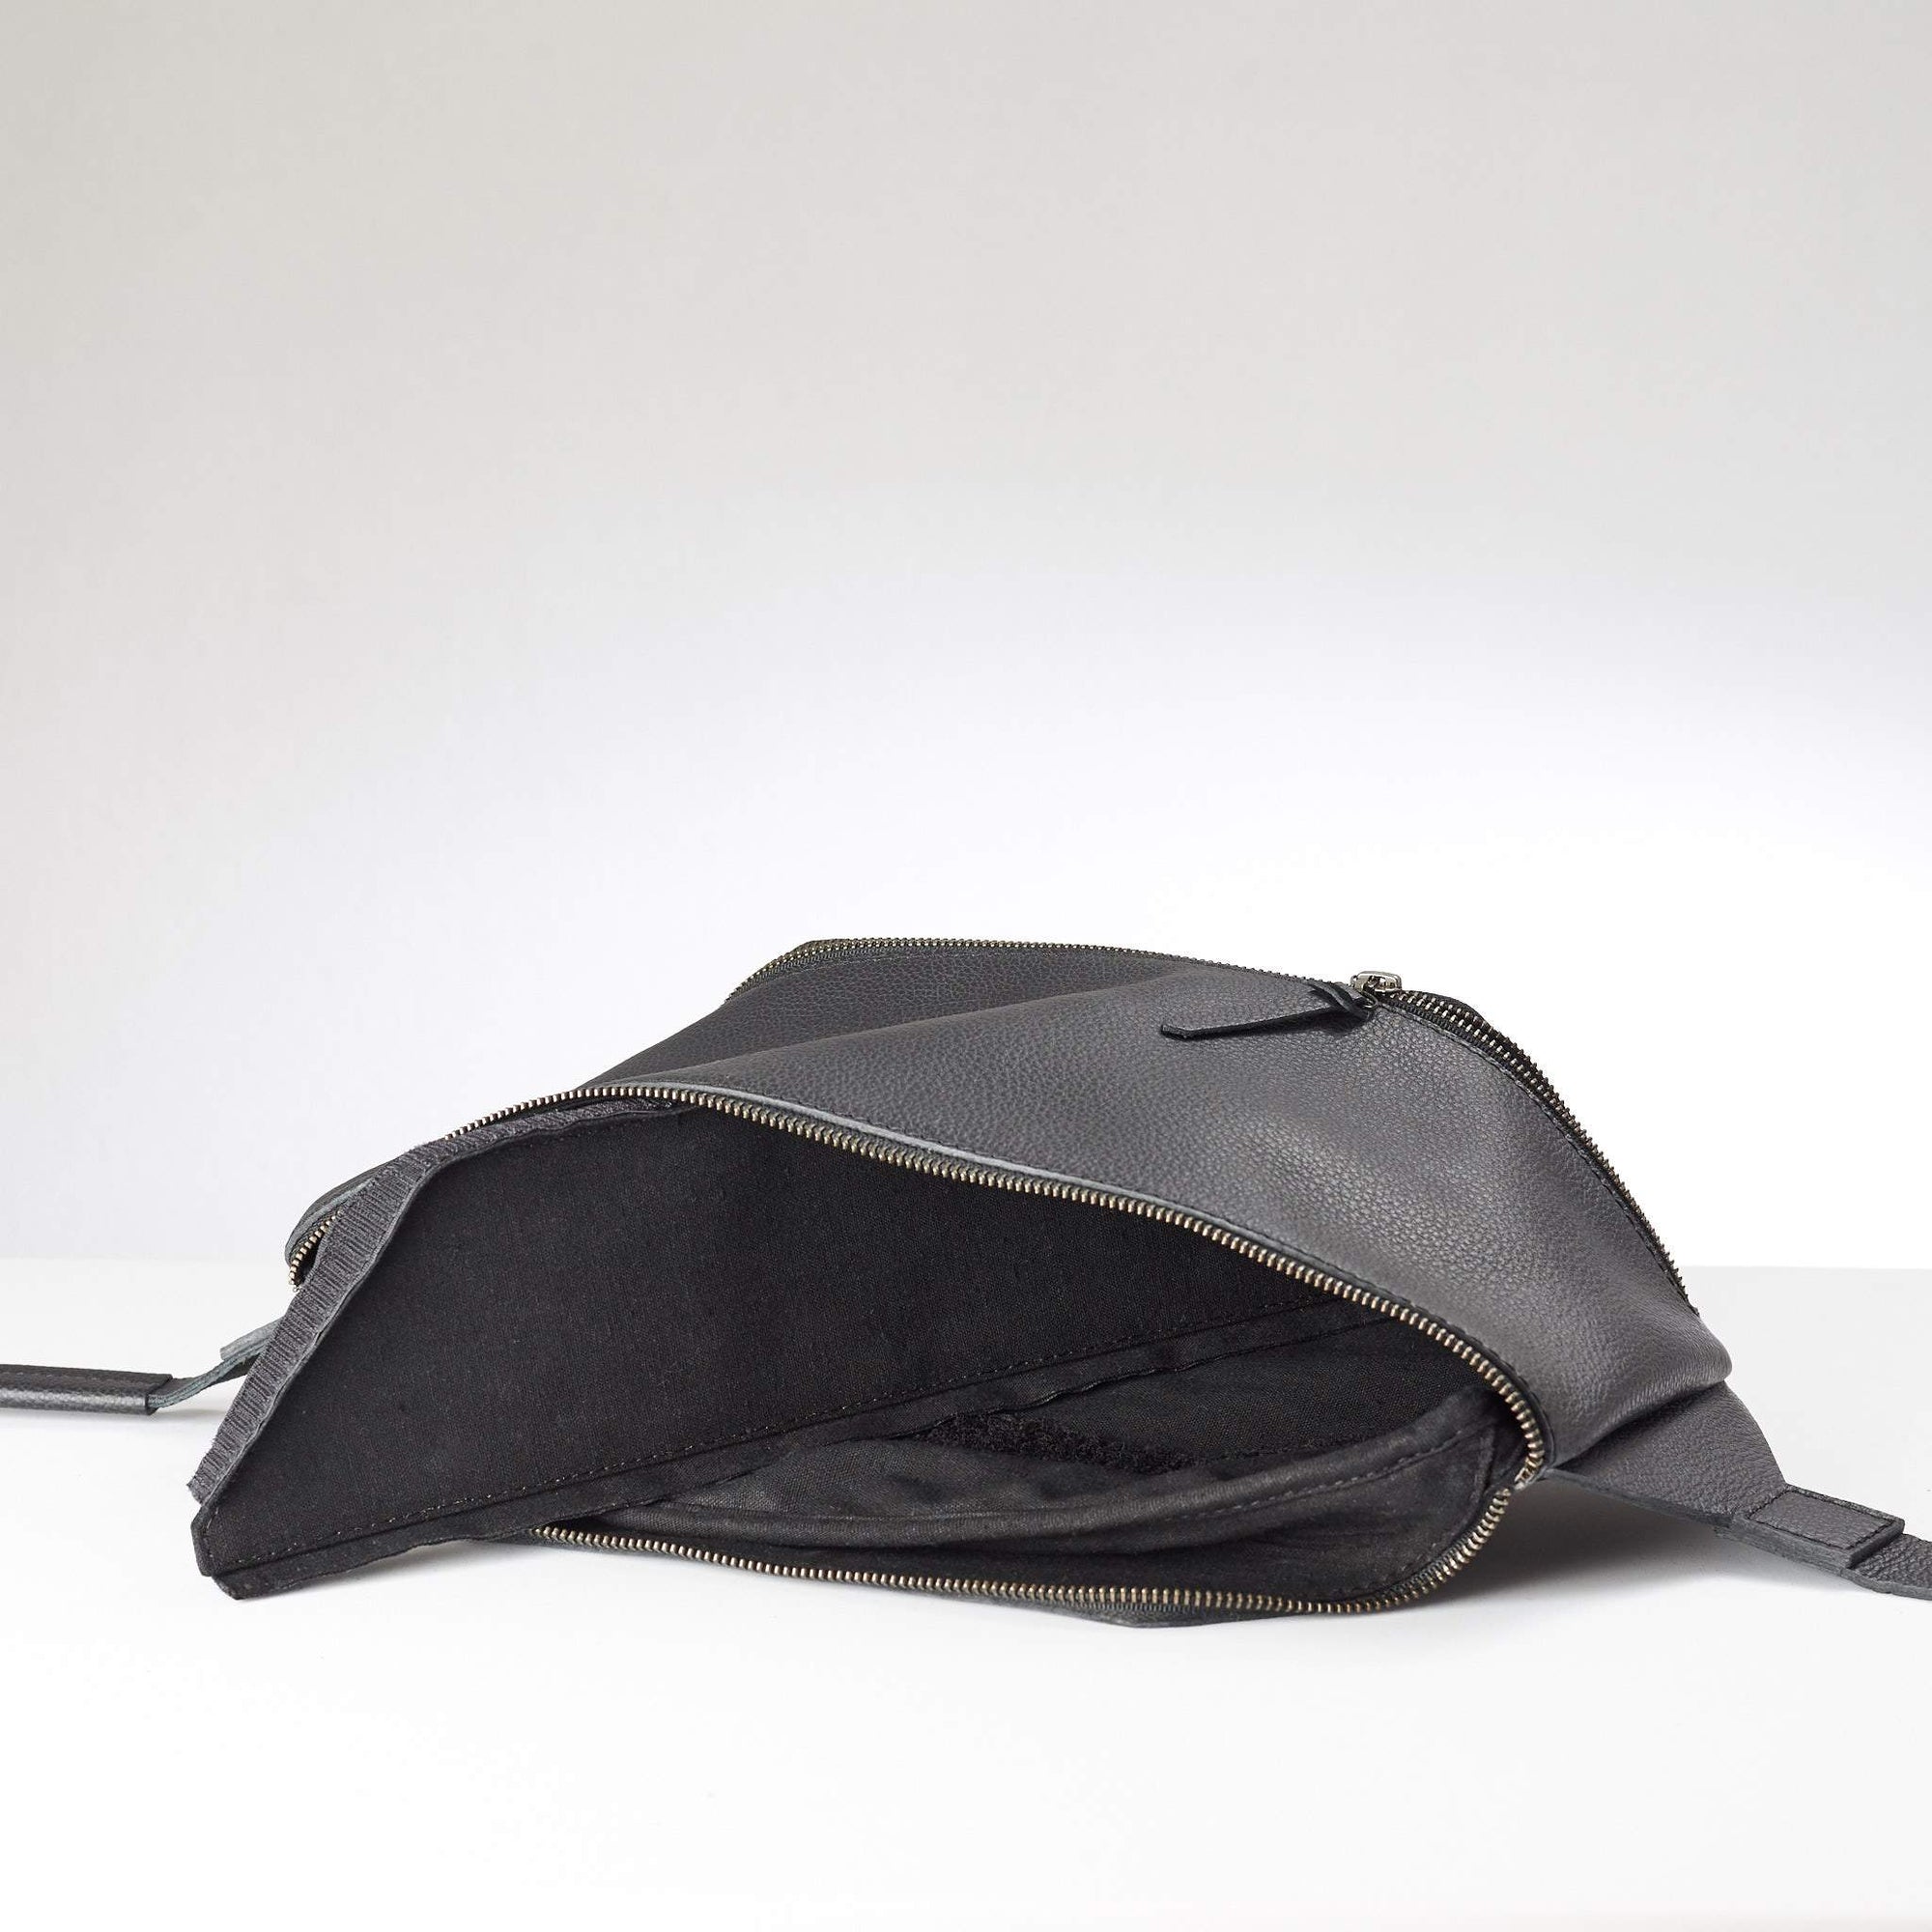 Linen interior. Fenek Sling Bag Black by Capra Leather